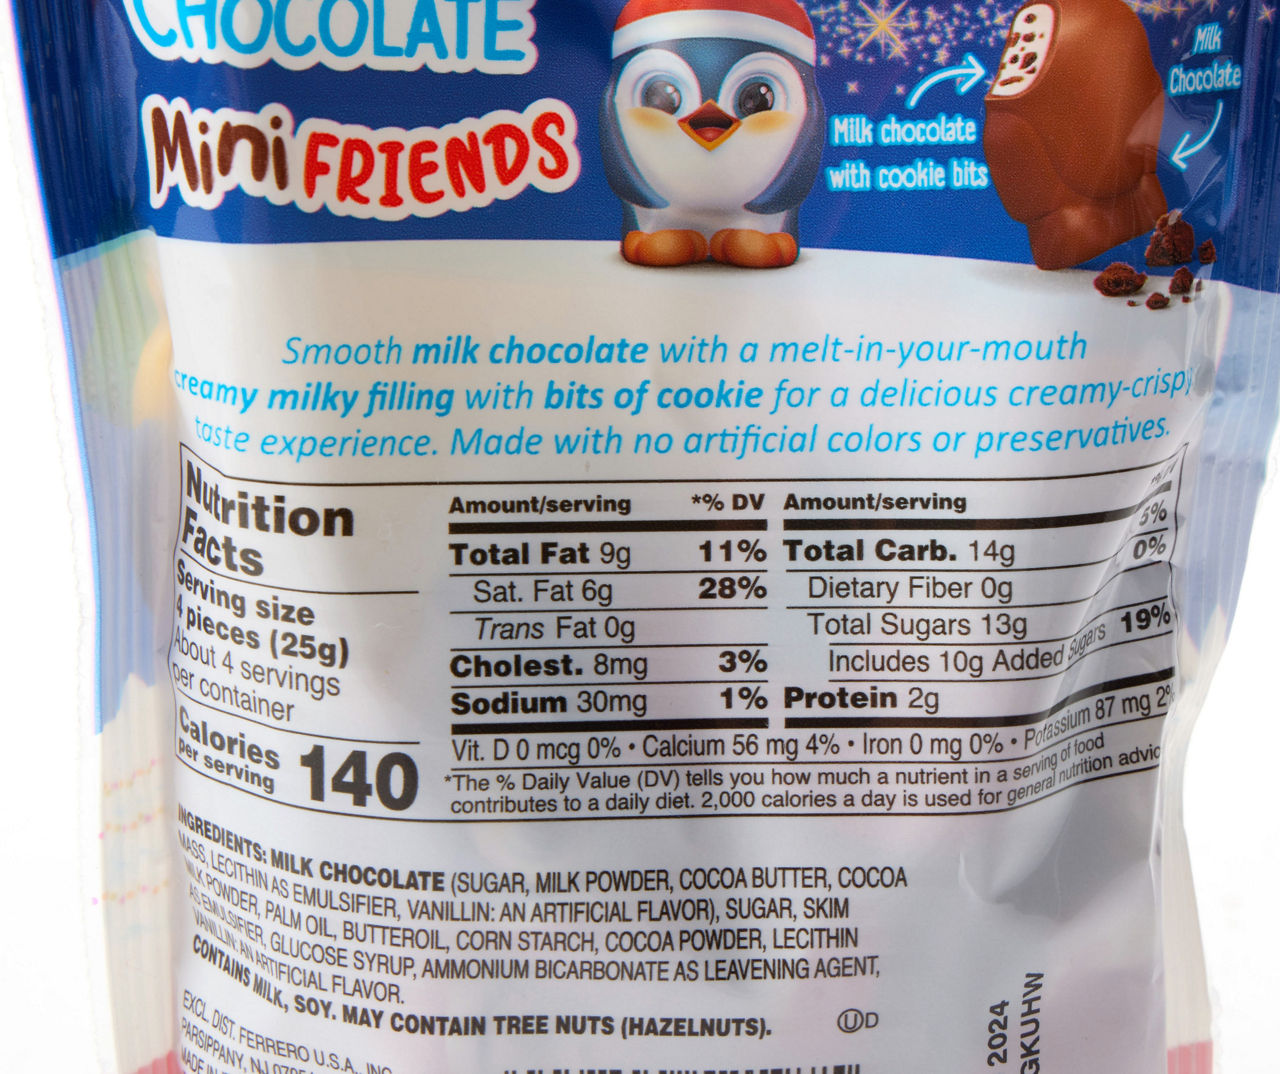 Kinder Joy Kinder Mini Friends Milk Chocolate & Cookie Penguins, 4.3 Oz.